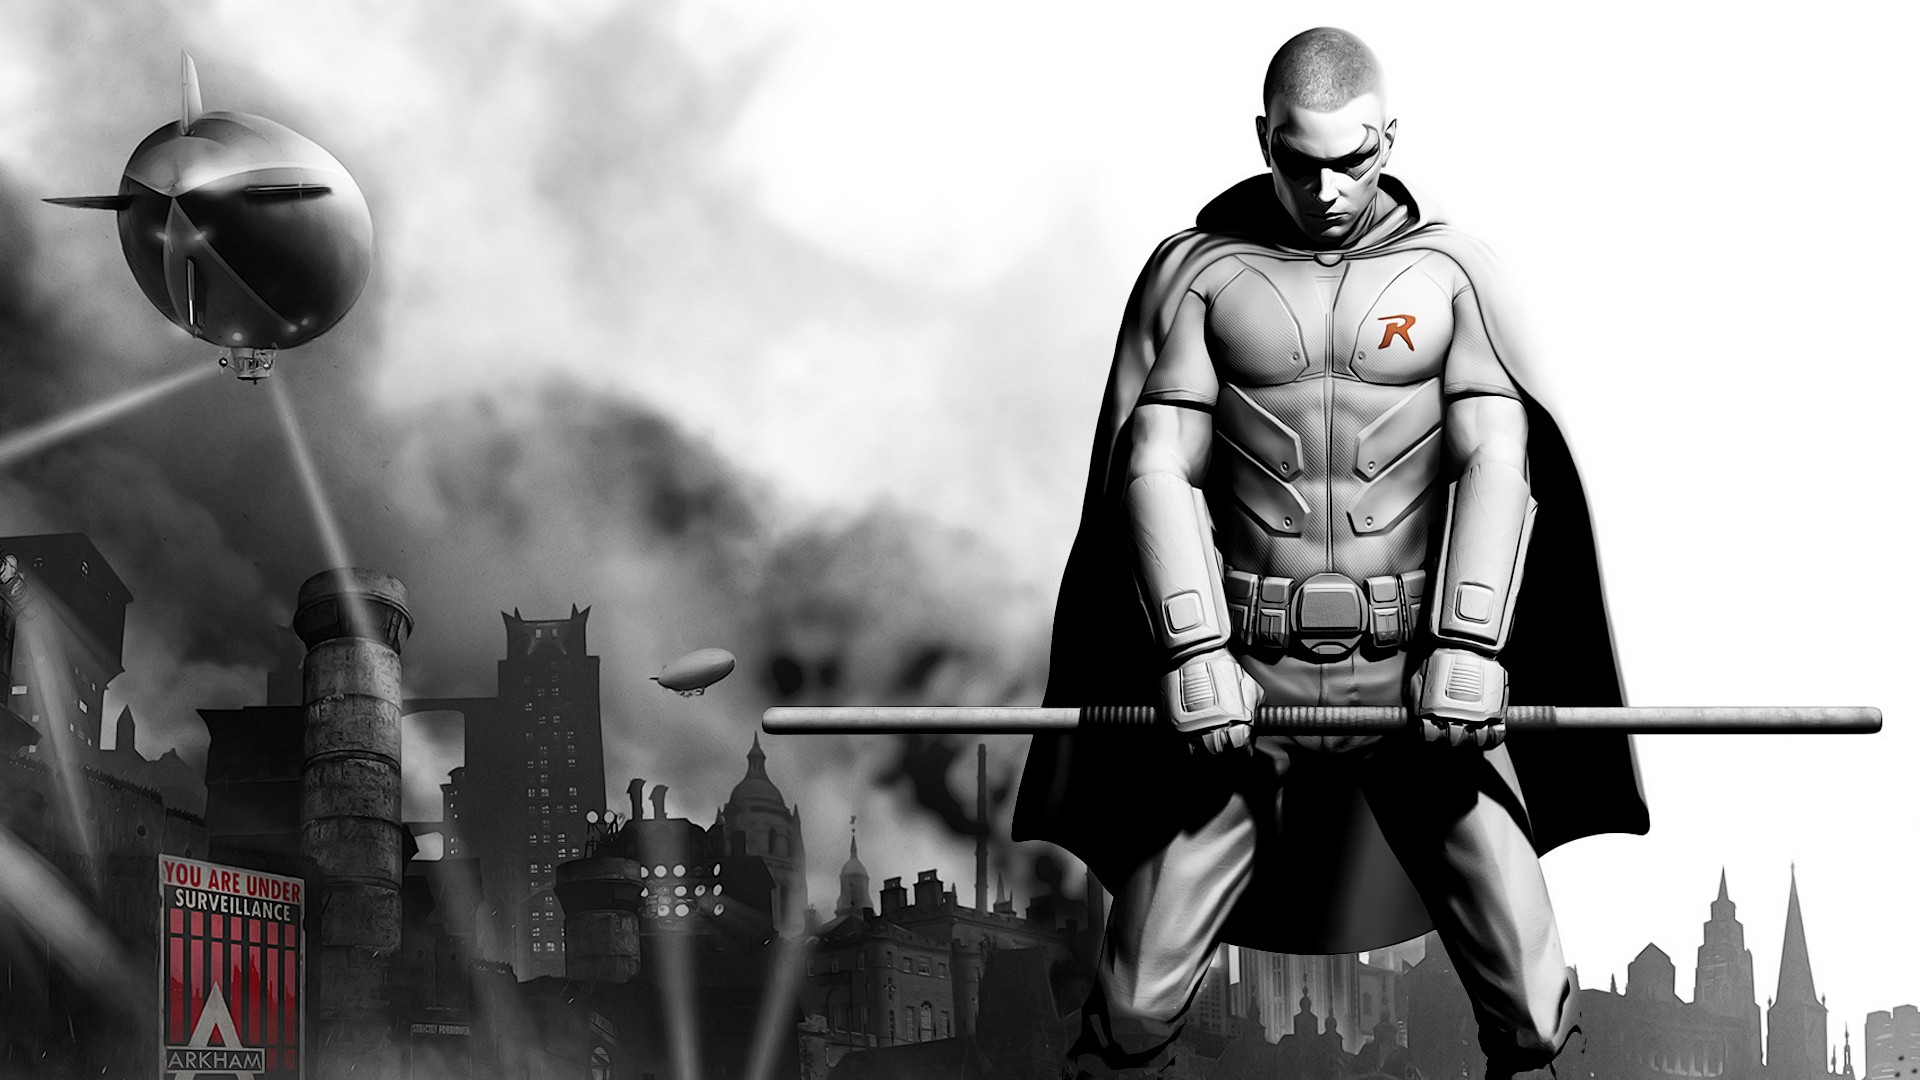 hd batman arkham city background